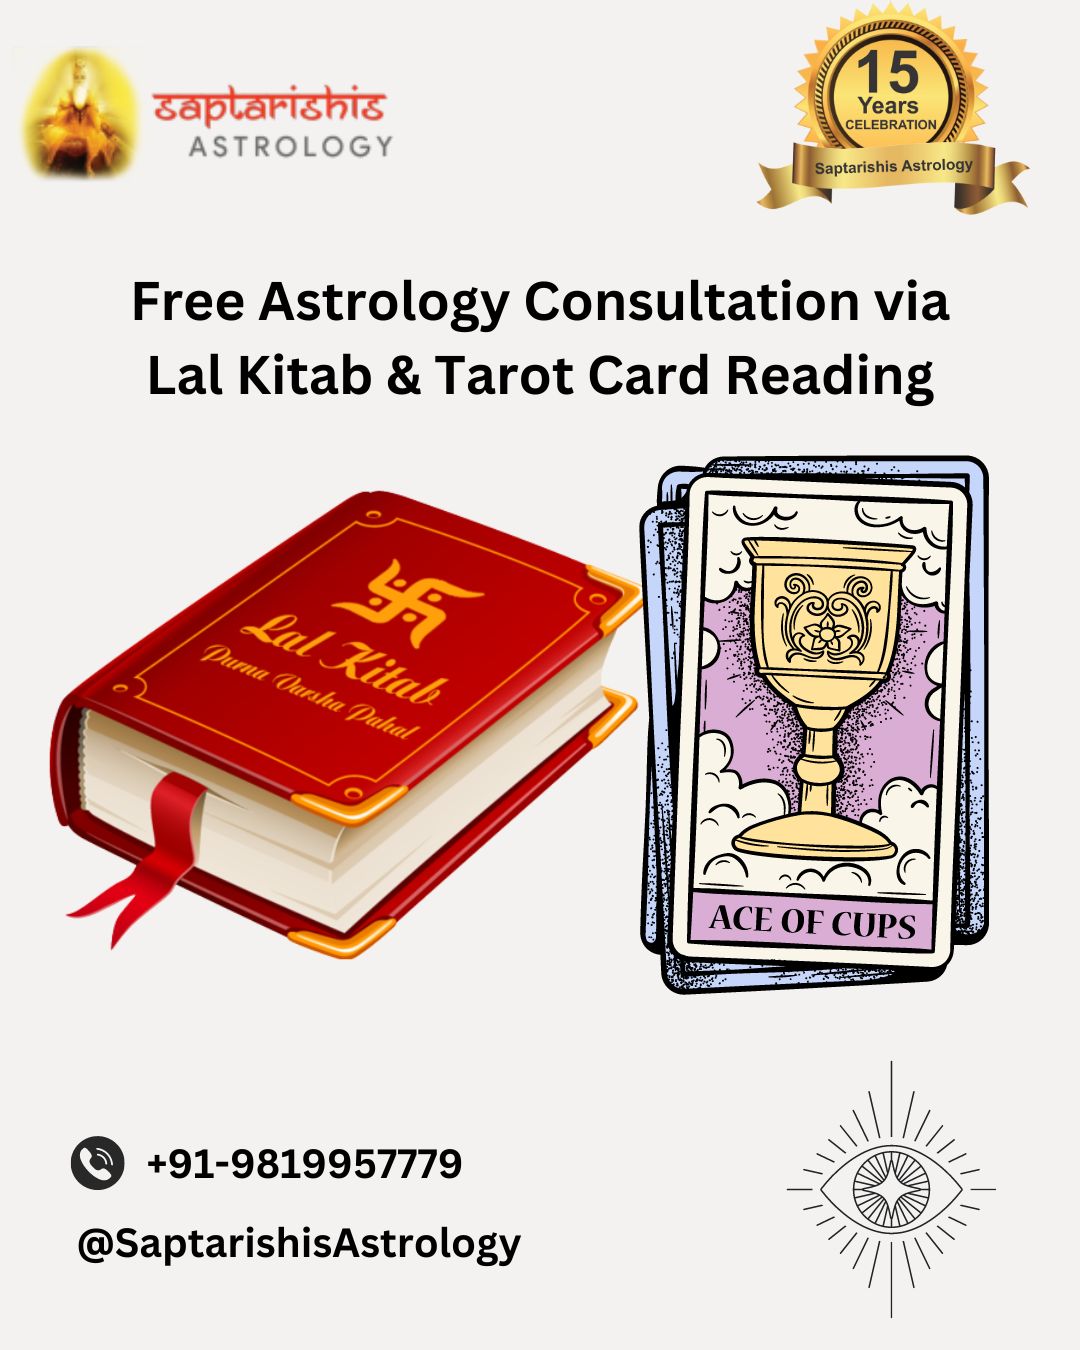 Free Astrology Consultation via Lal Kitab & Tarot Card Reading